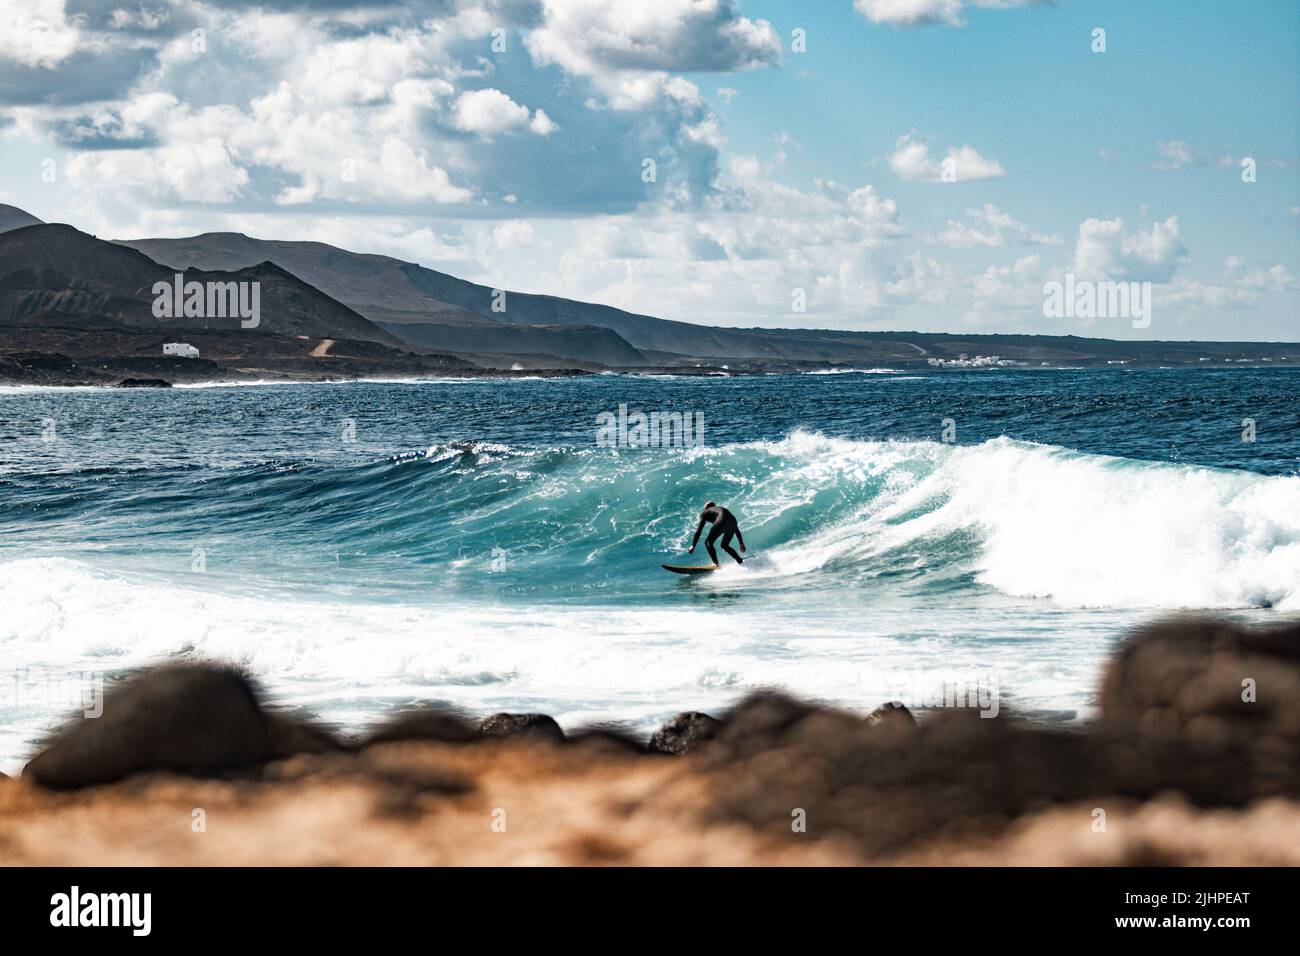 Wild rocky coastline of surf spot La Santa Lanzarote, Canary Islands, Spain. Surfer riding a big wave in rocky bay, volcano mountain in background. Stock Photo